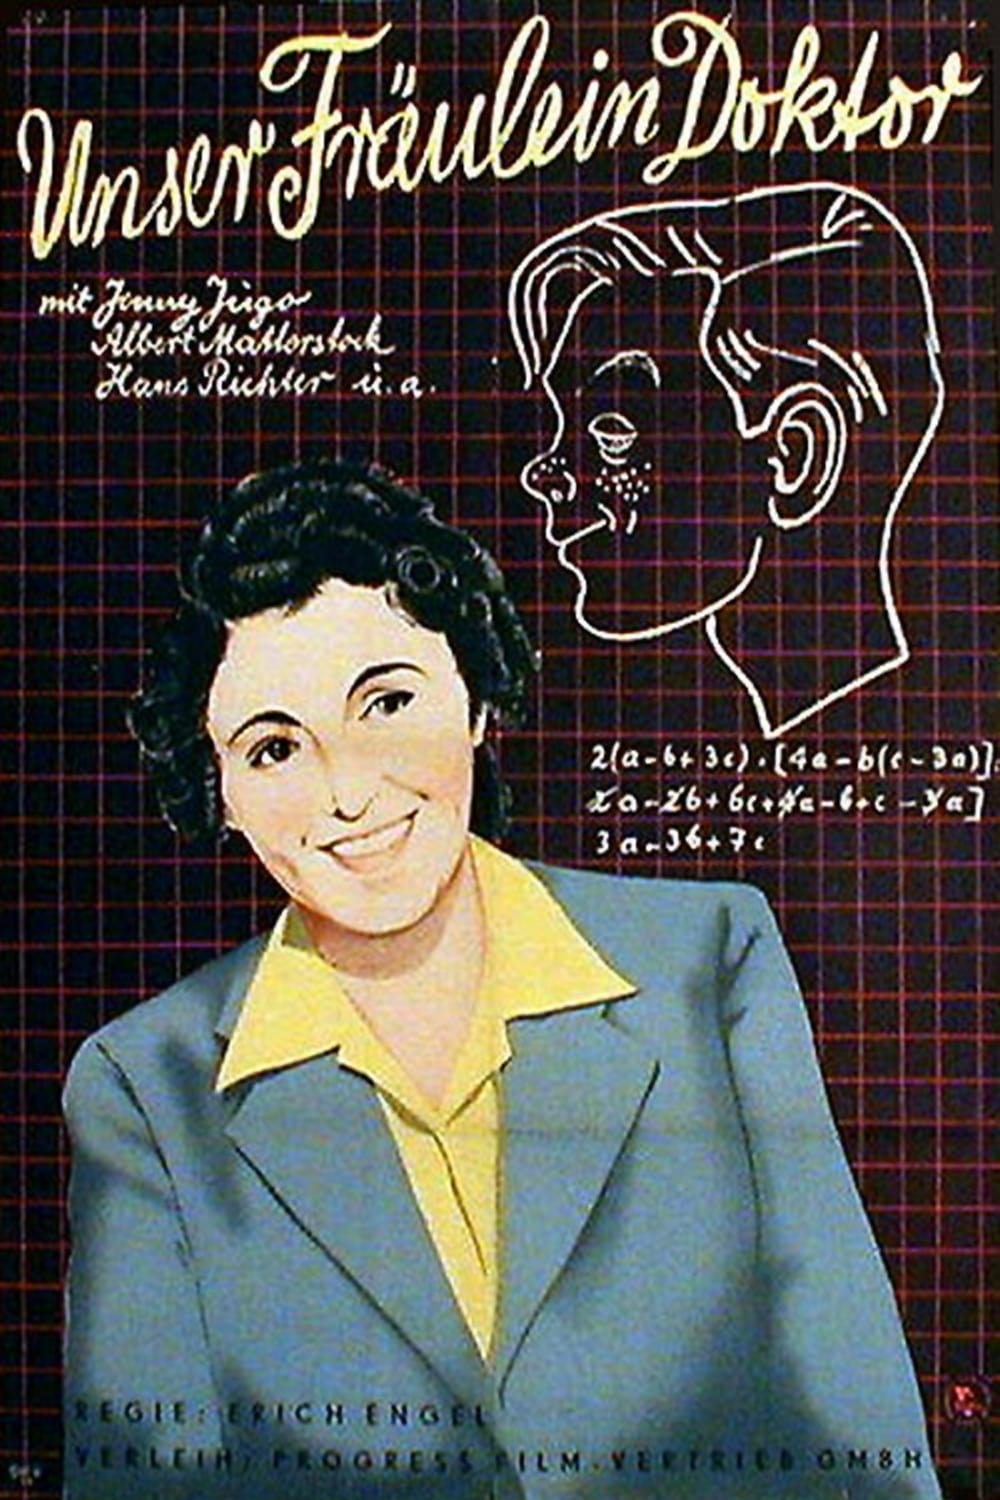 Unser Fräulein Doktor (1940)